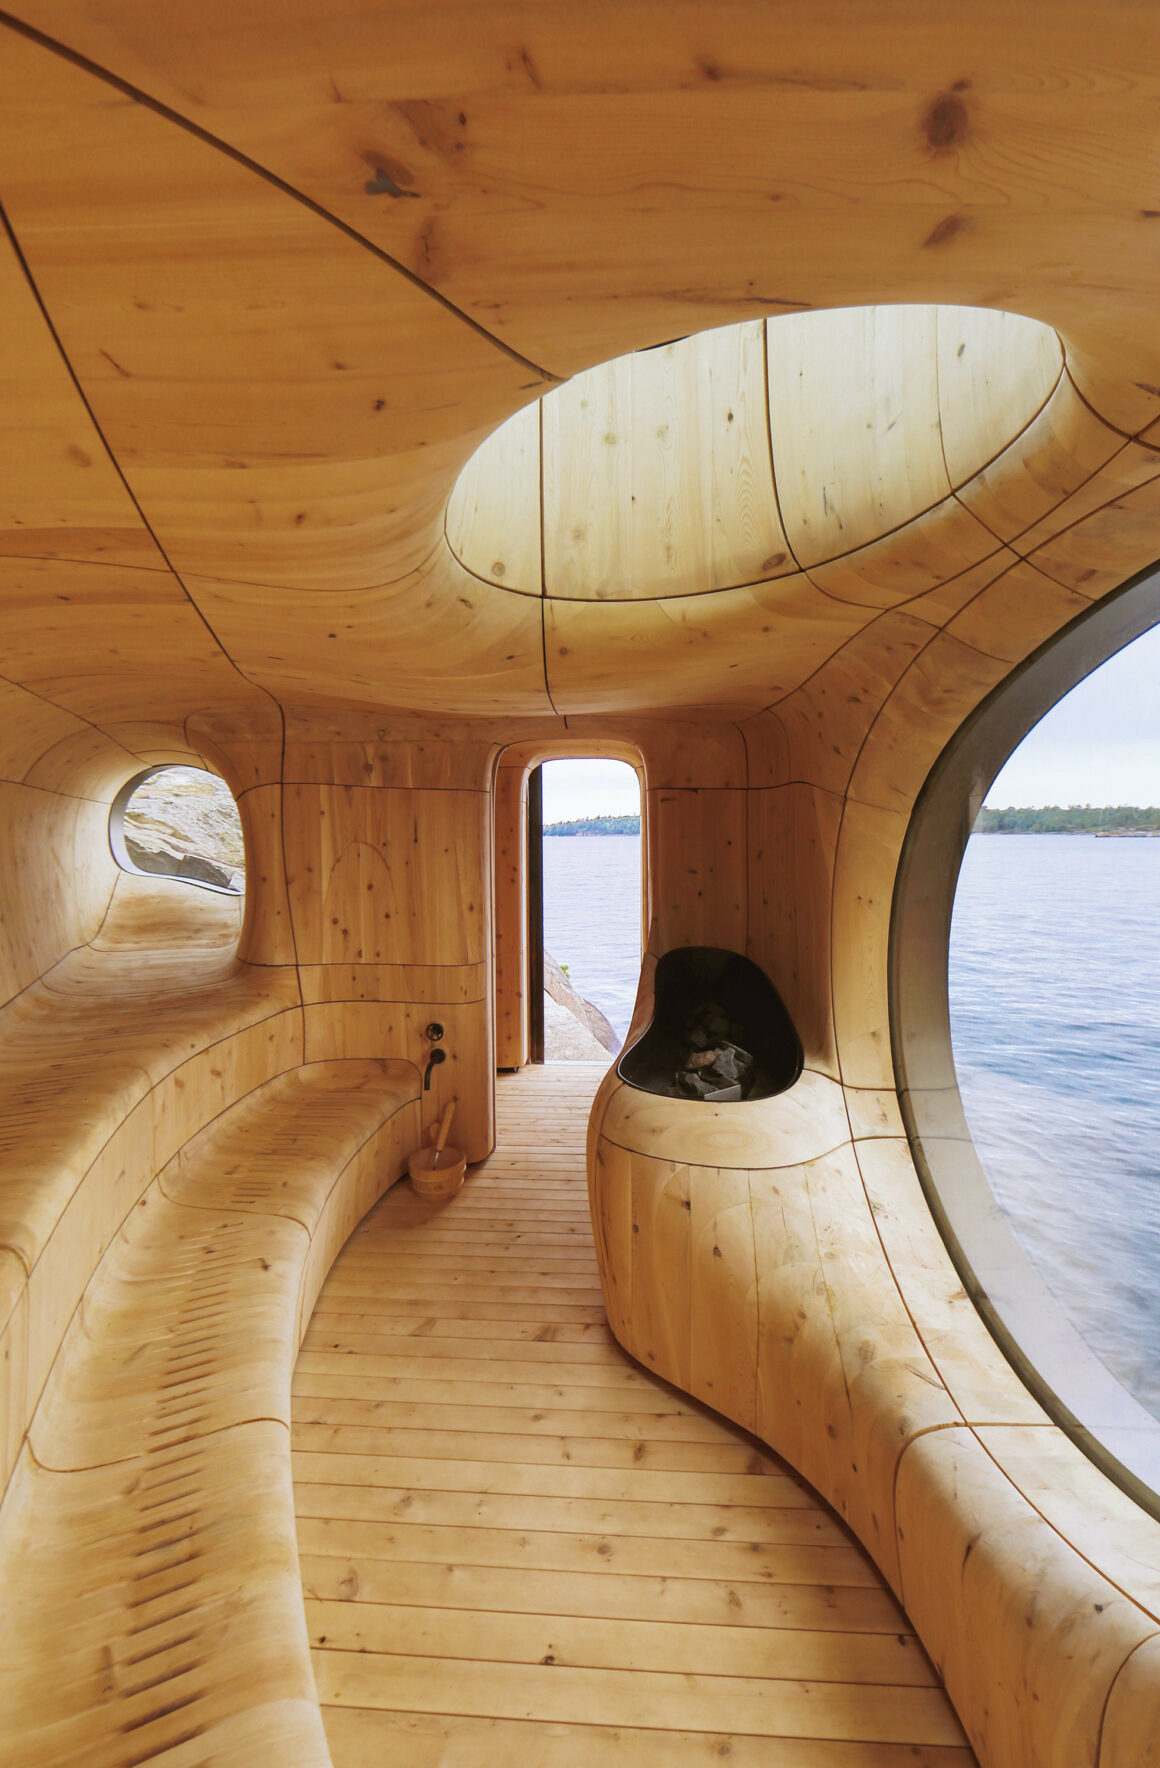 Cave like wooden sauna interior